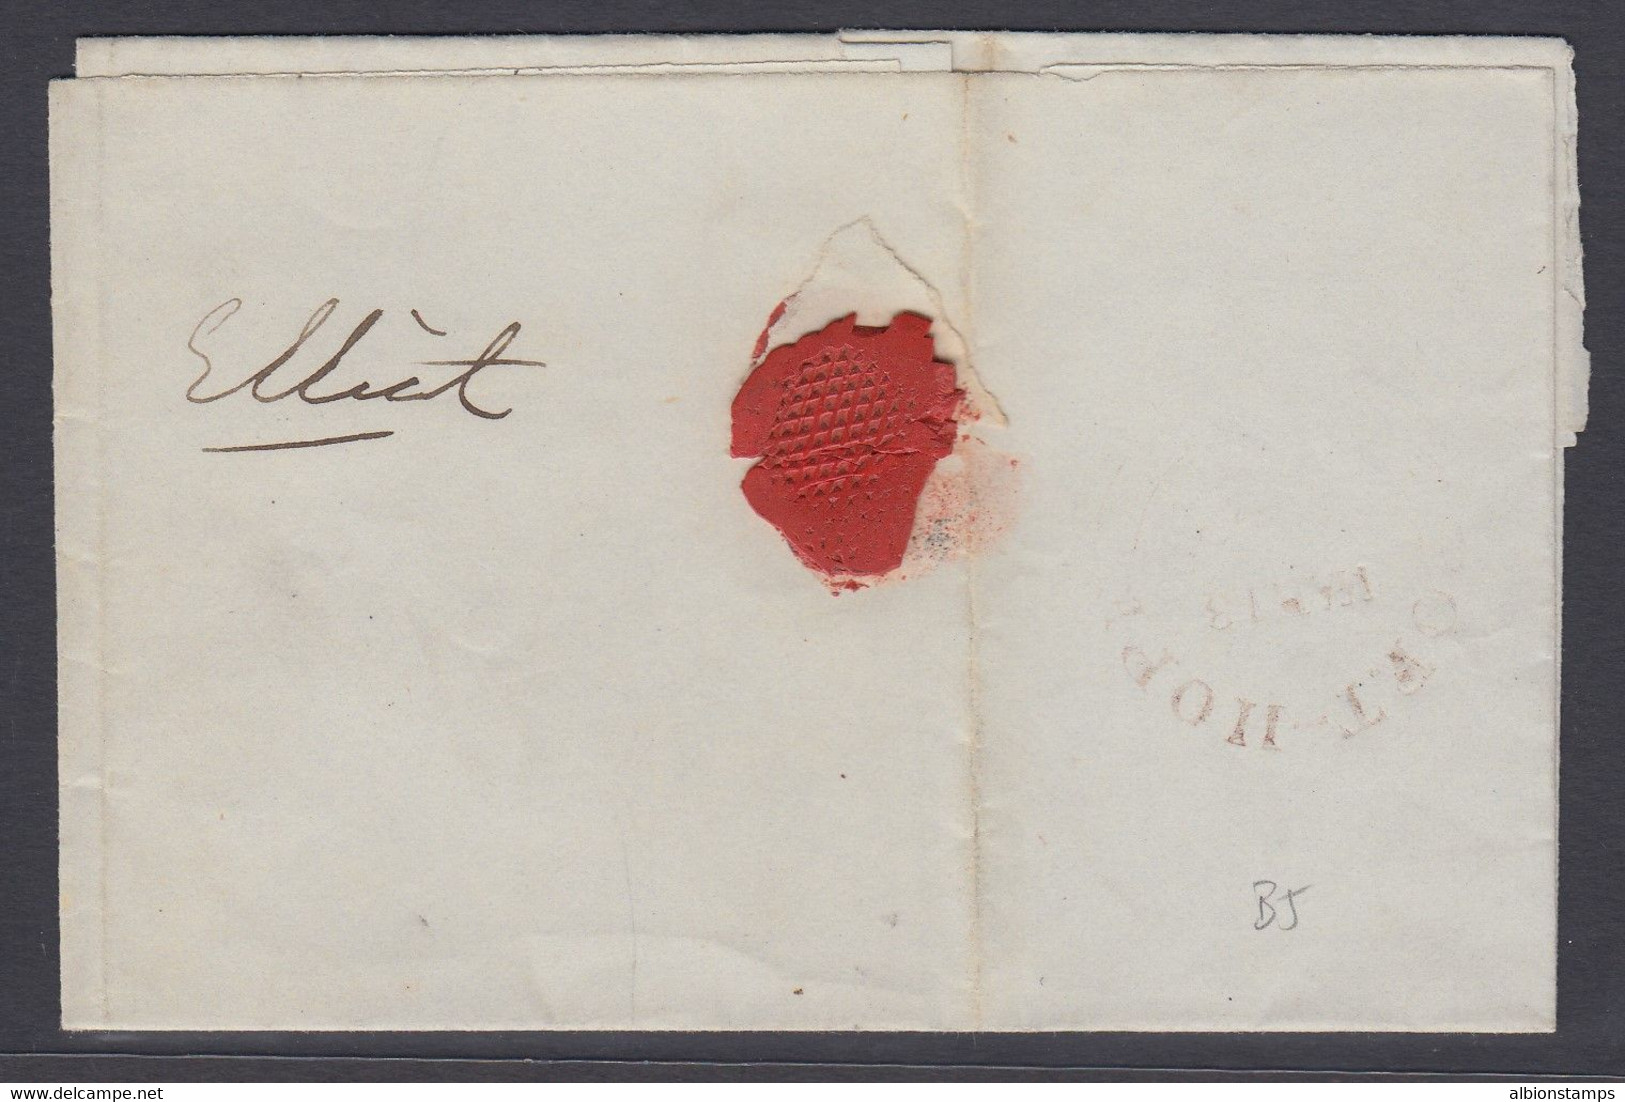 Canada 1852 Stampless Folded Cover, Cobourg And "3d" To Port Hope - ...-1851 Préphilatélie